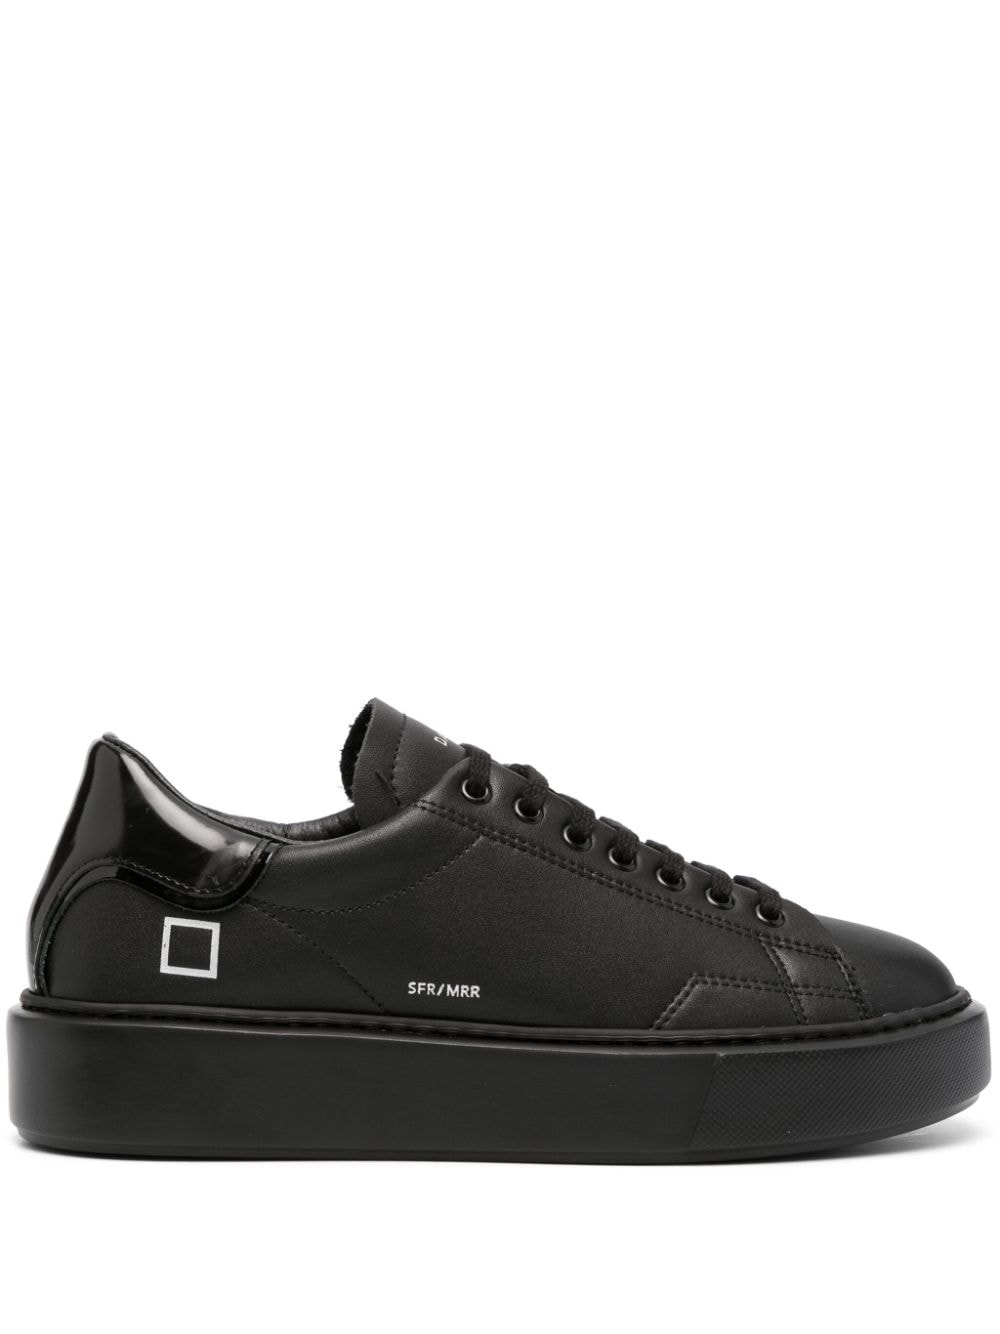 Date Sfera Mirror Sneakers In Black Leather